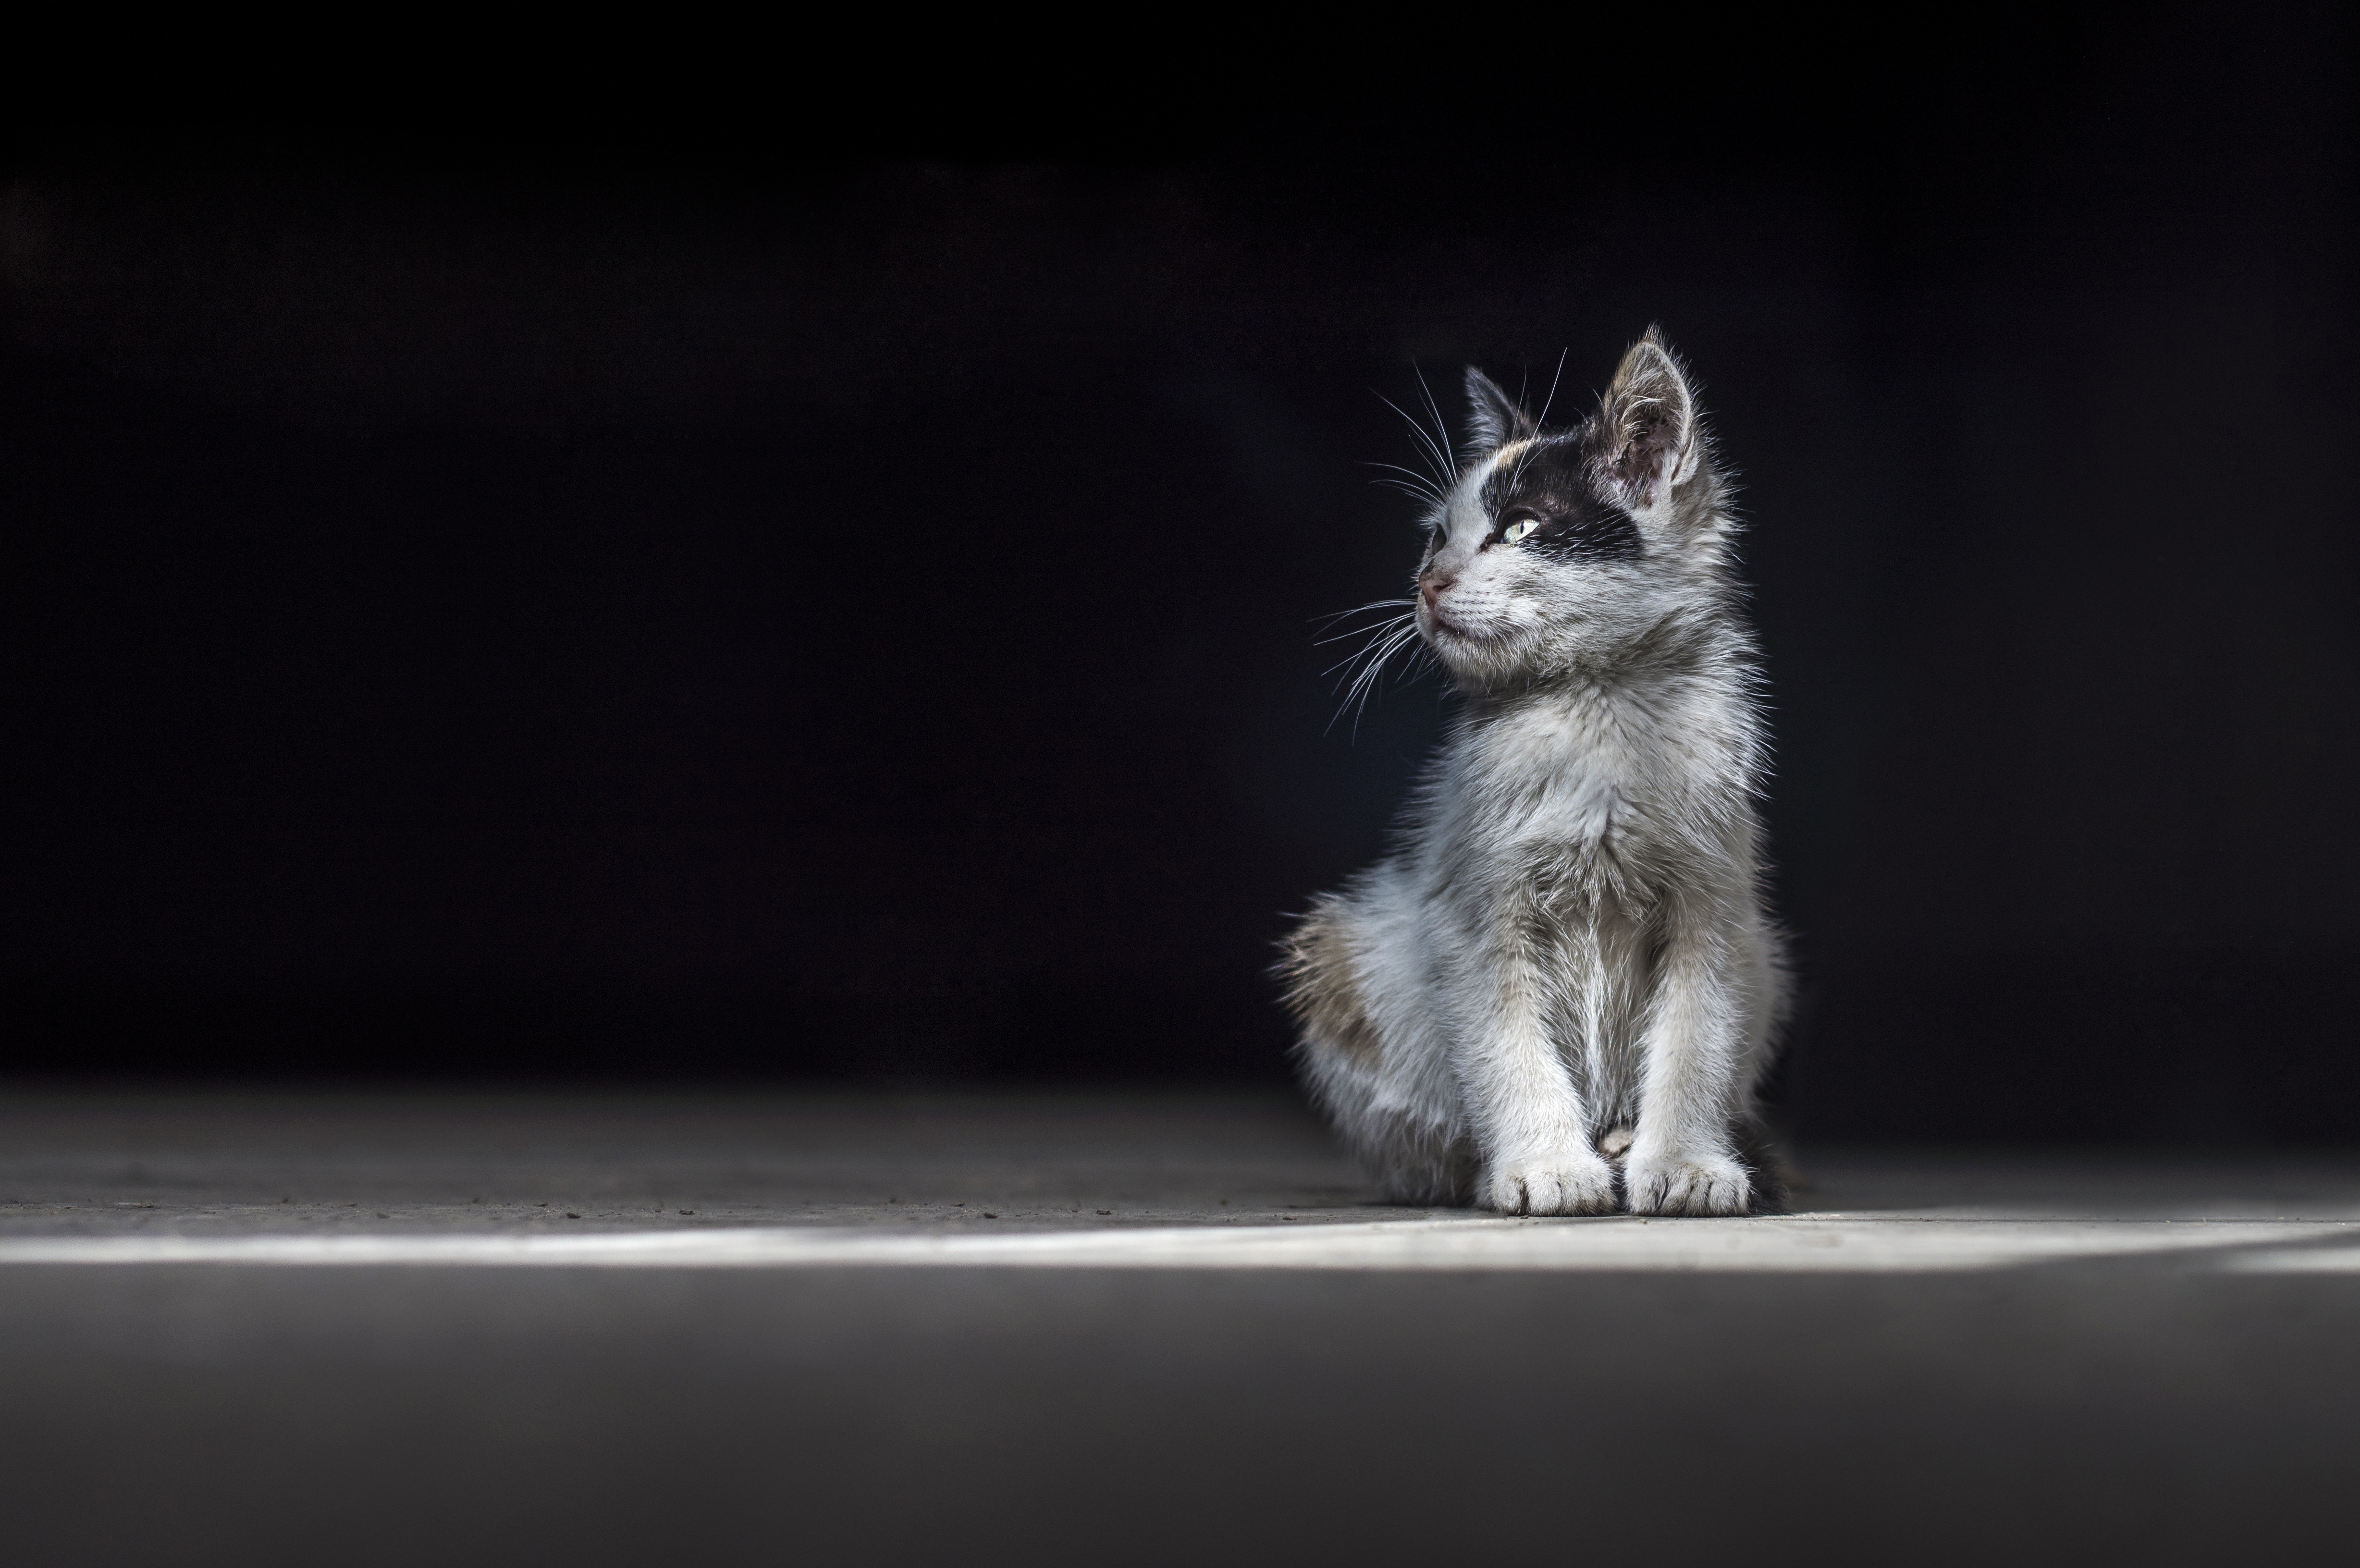 Lonely Kitten Portrait by Abdou Moussaoui